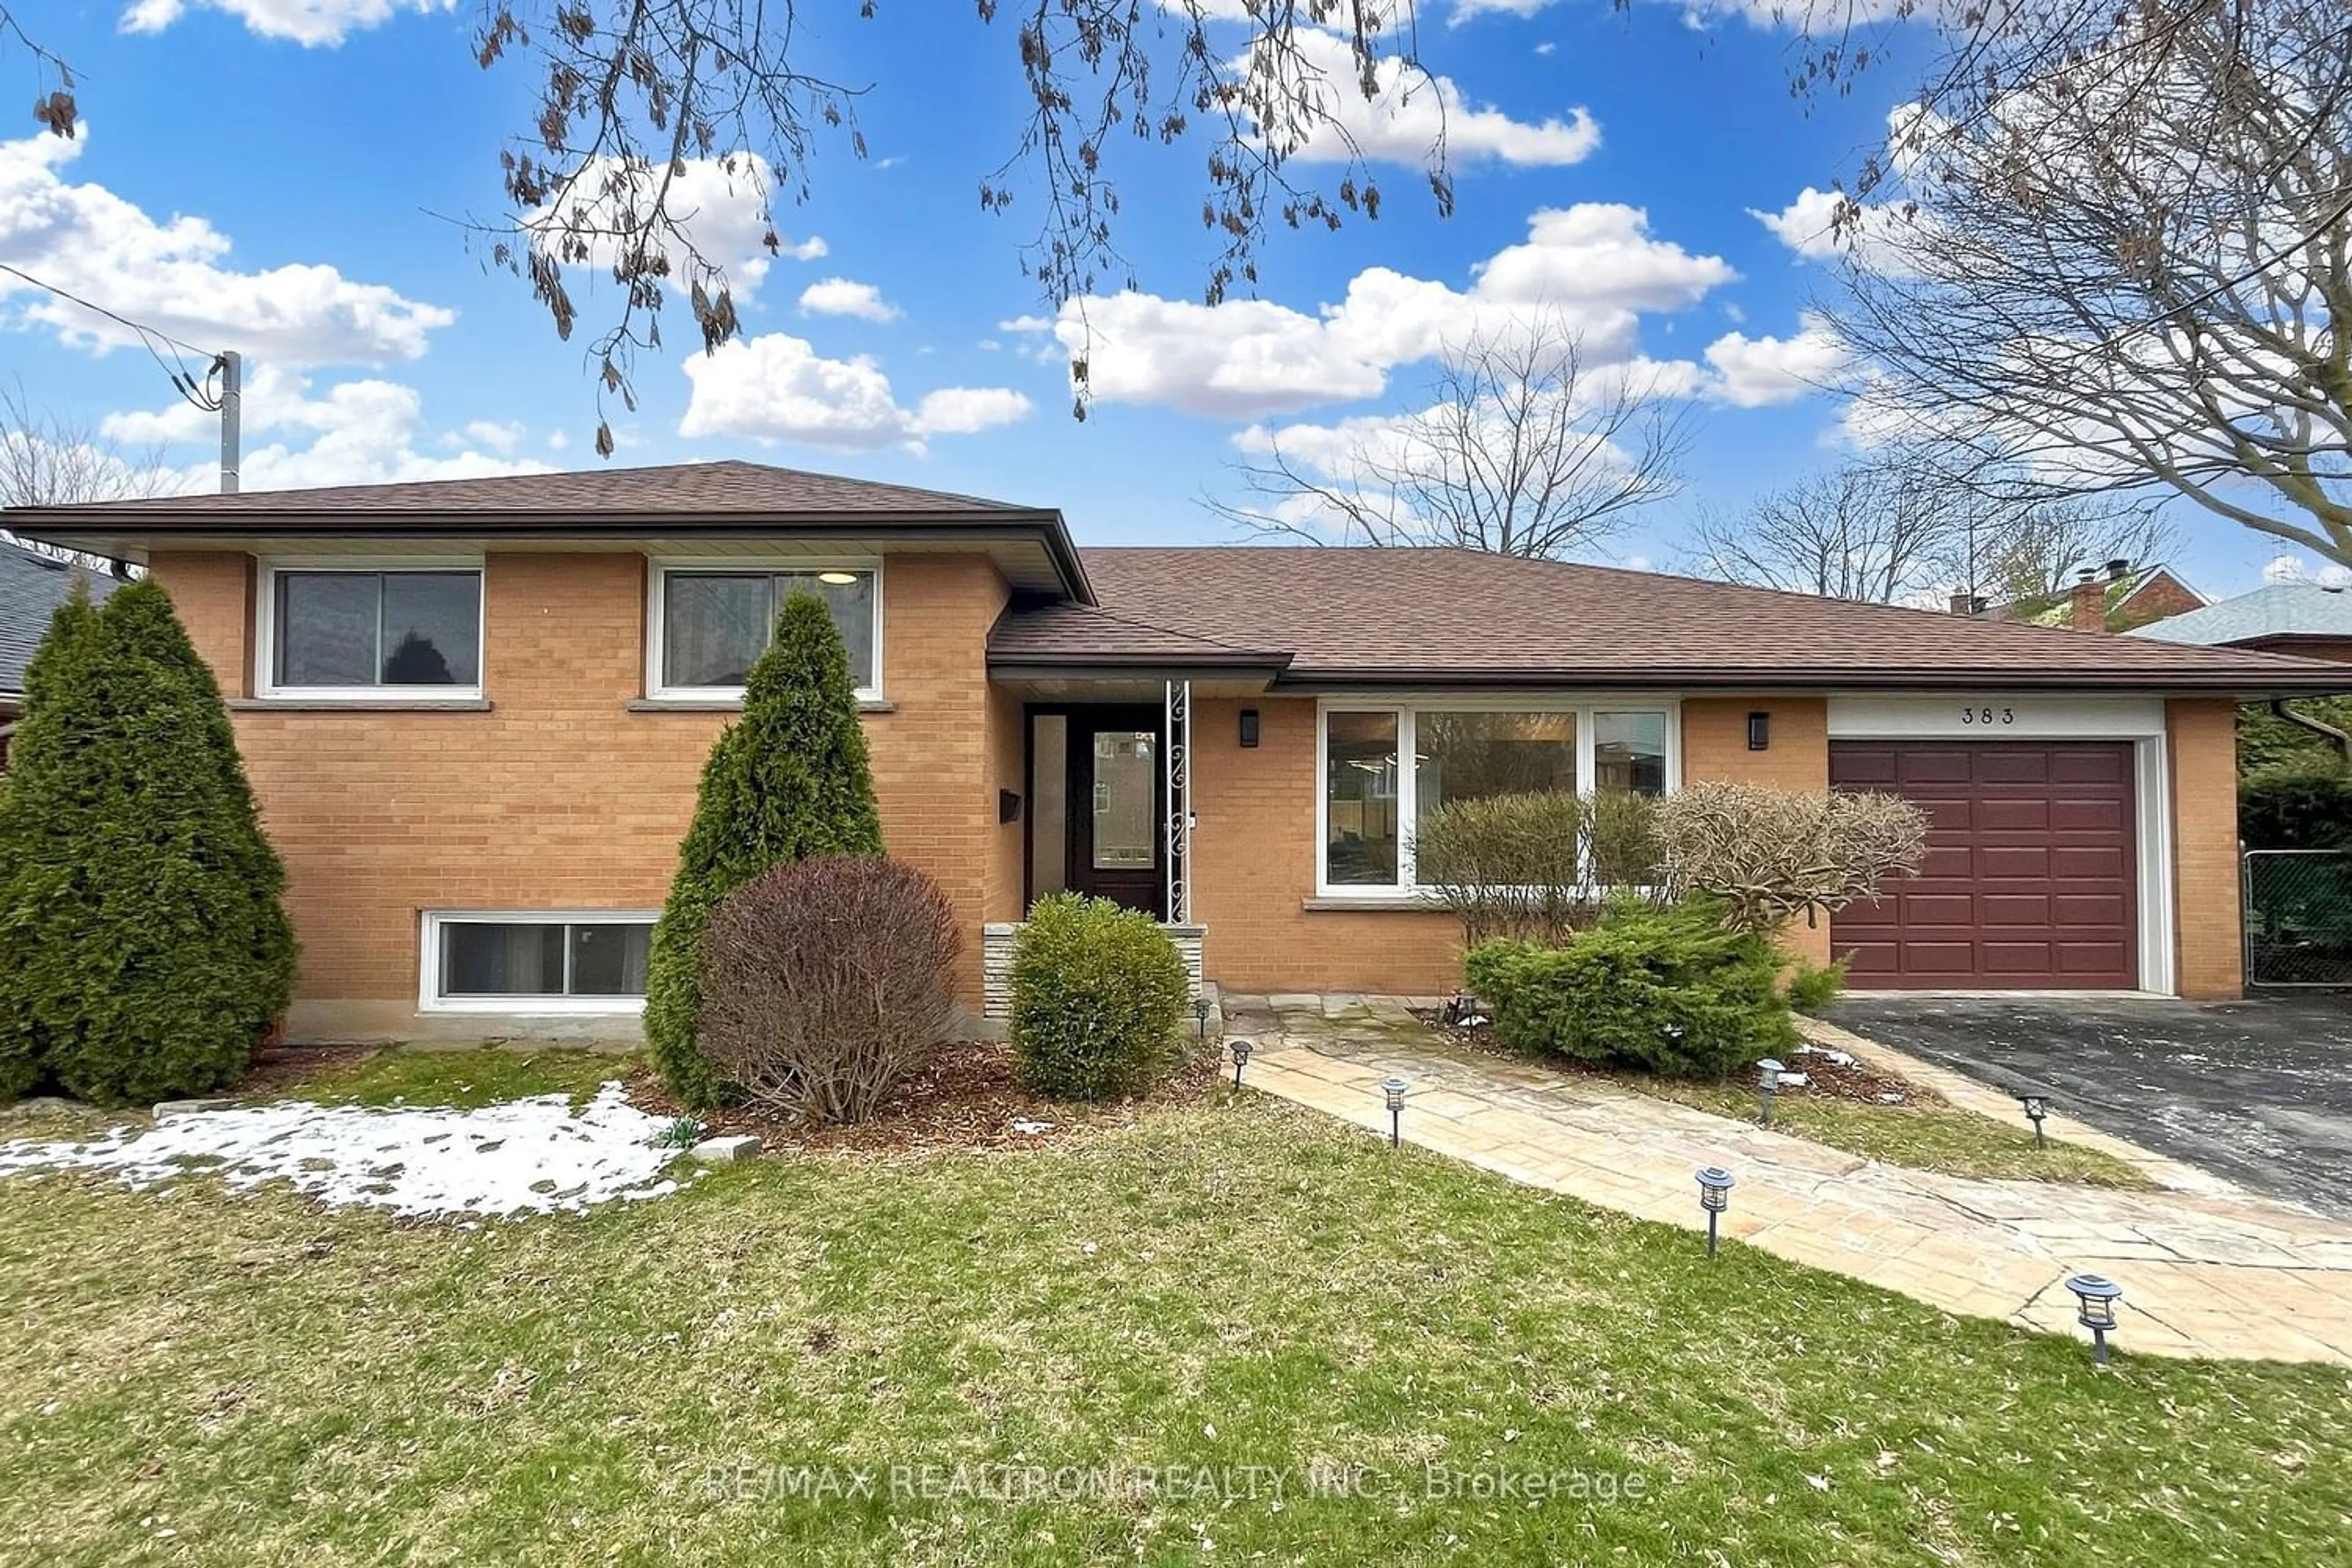 Home with brick exterior material for 383 Ridgeway Ave, Oshawa Ontario L1J 2V6